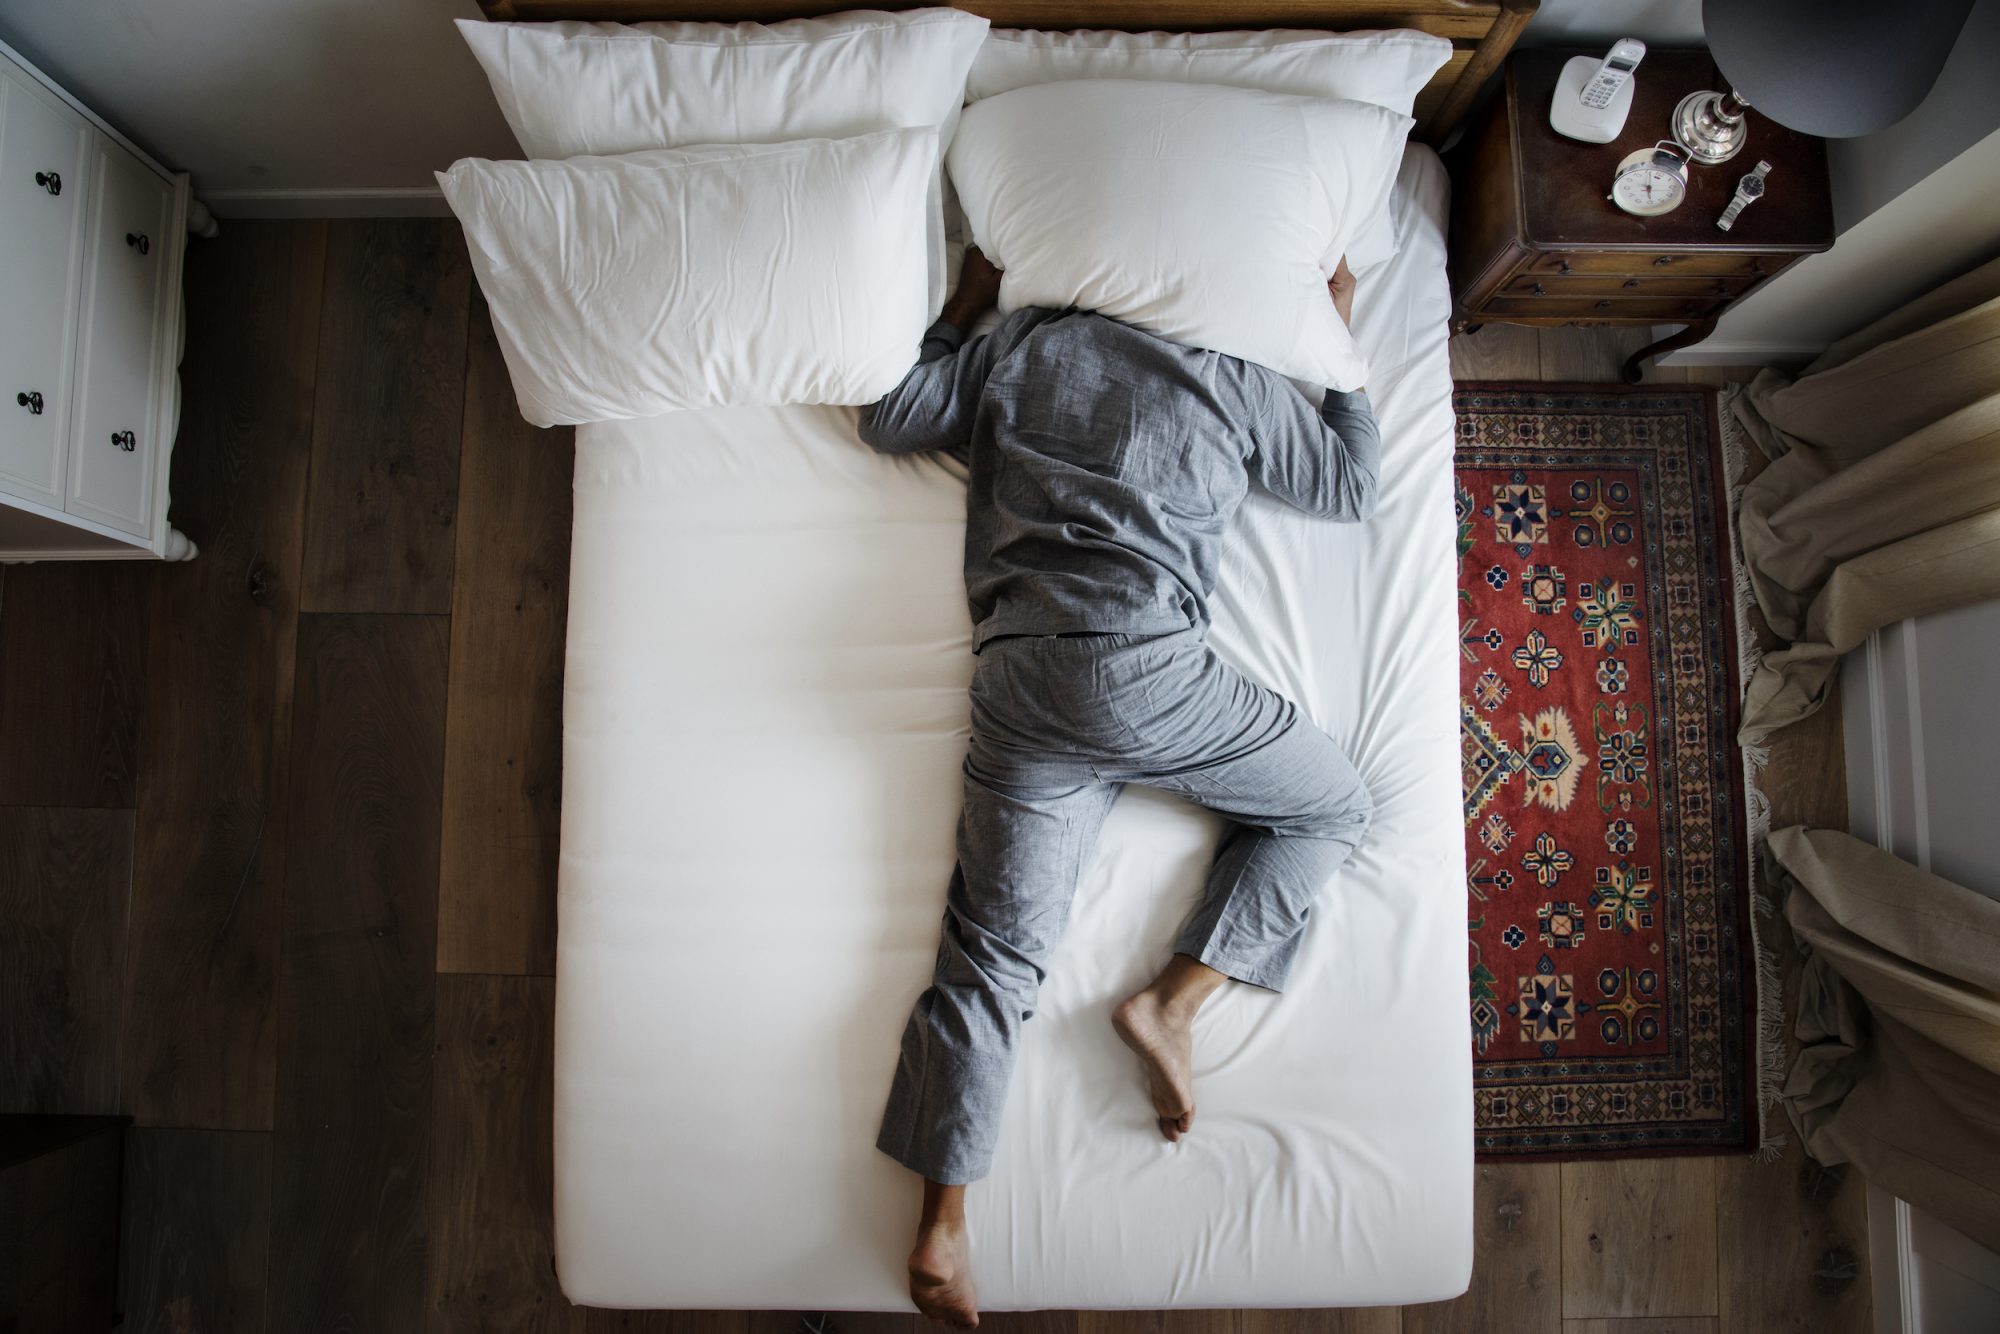 9 tips to get rid of sleep disorders after Ramadan